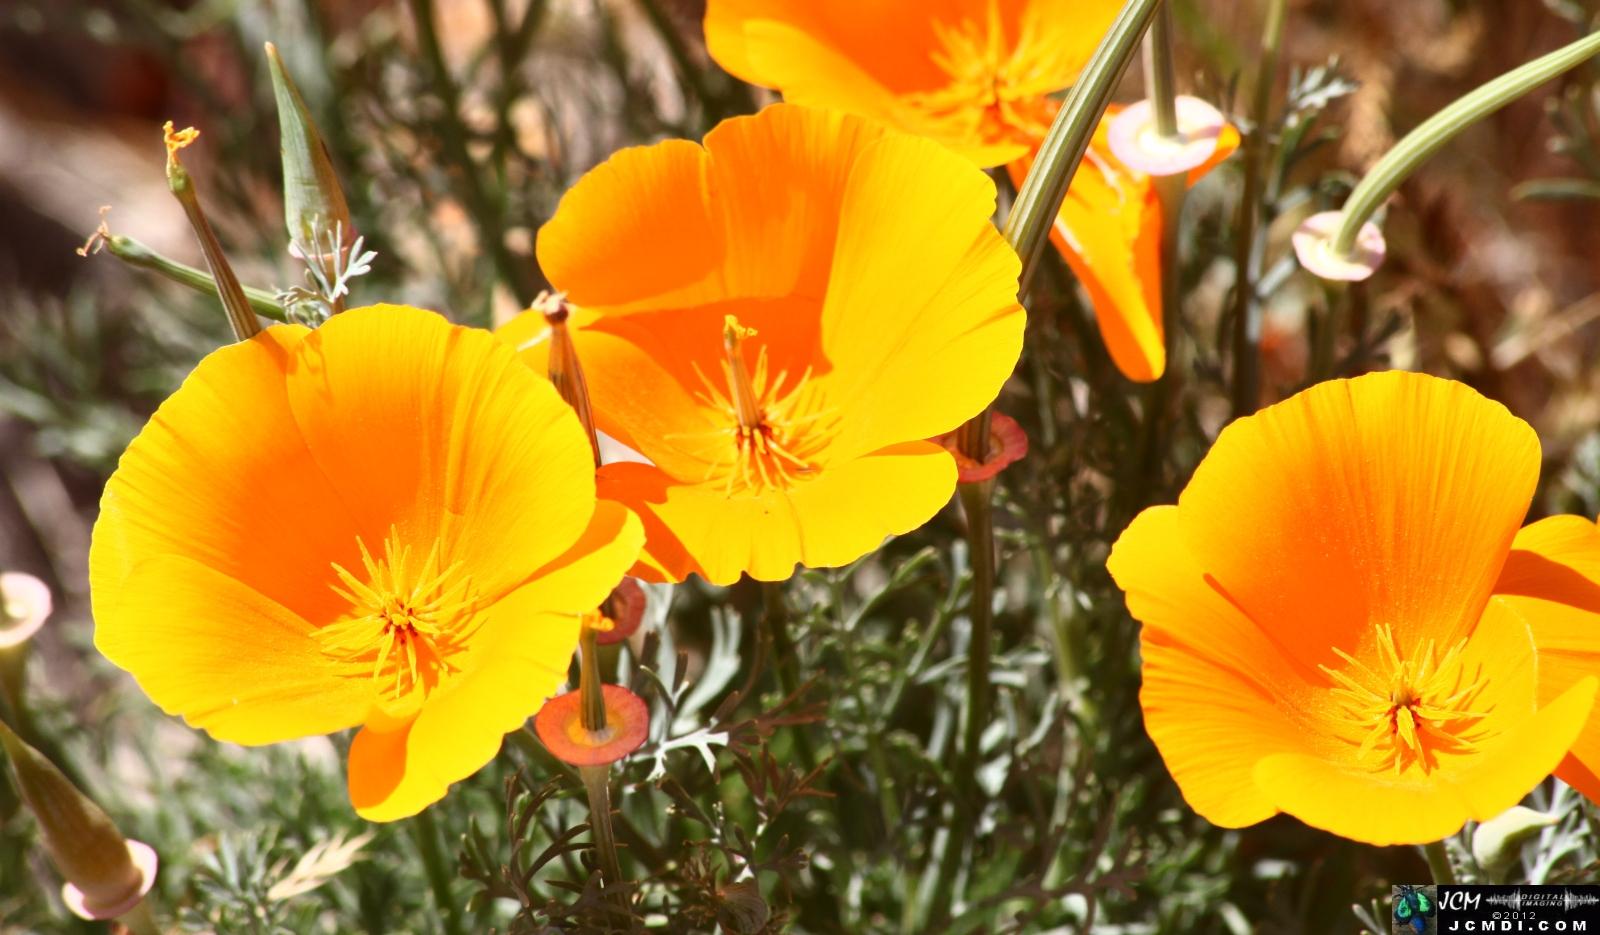 California Poppy Reserve in the Antelope Valley, CA, Spring 2012